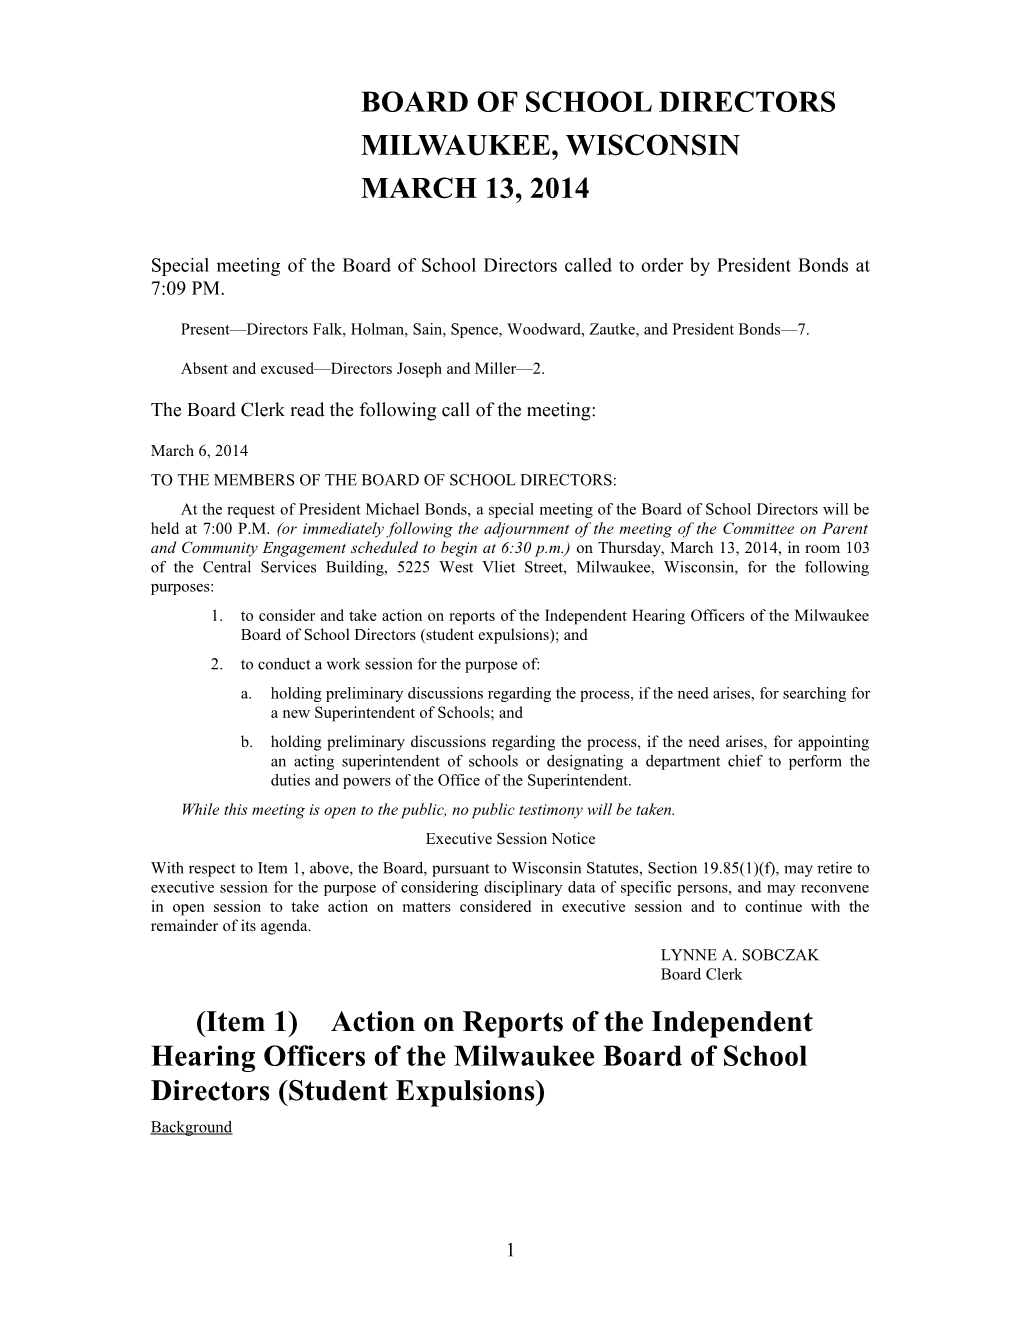 March 2014 Proceedings of the Milwaukee Board of School Directors